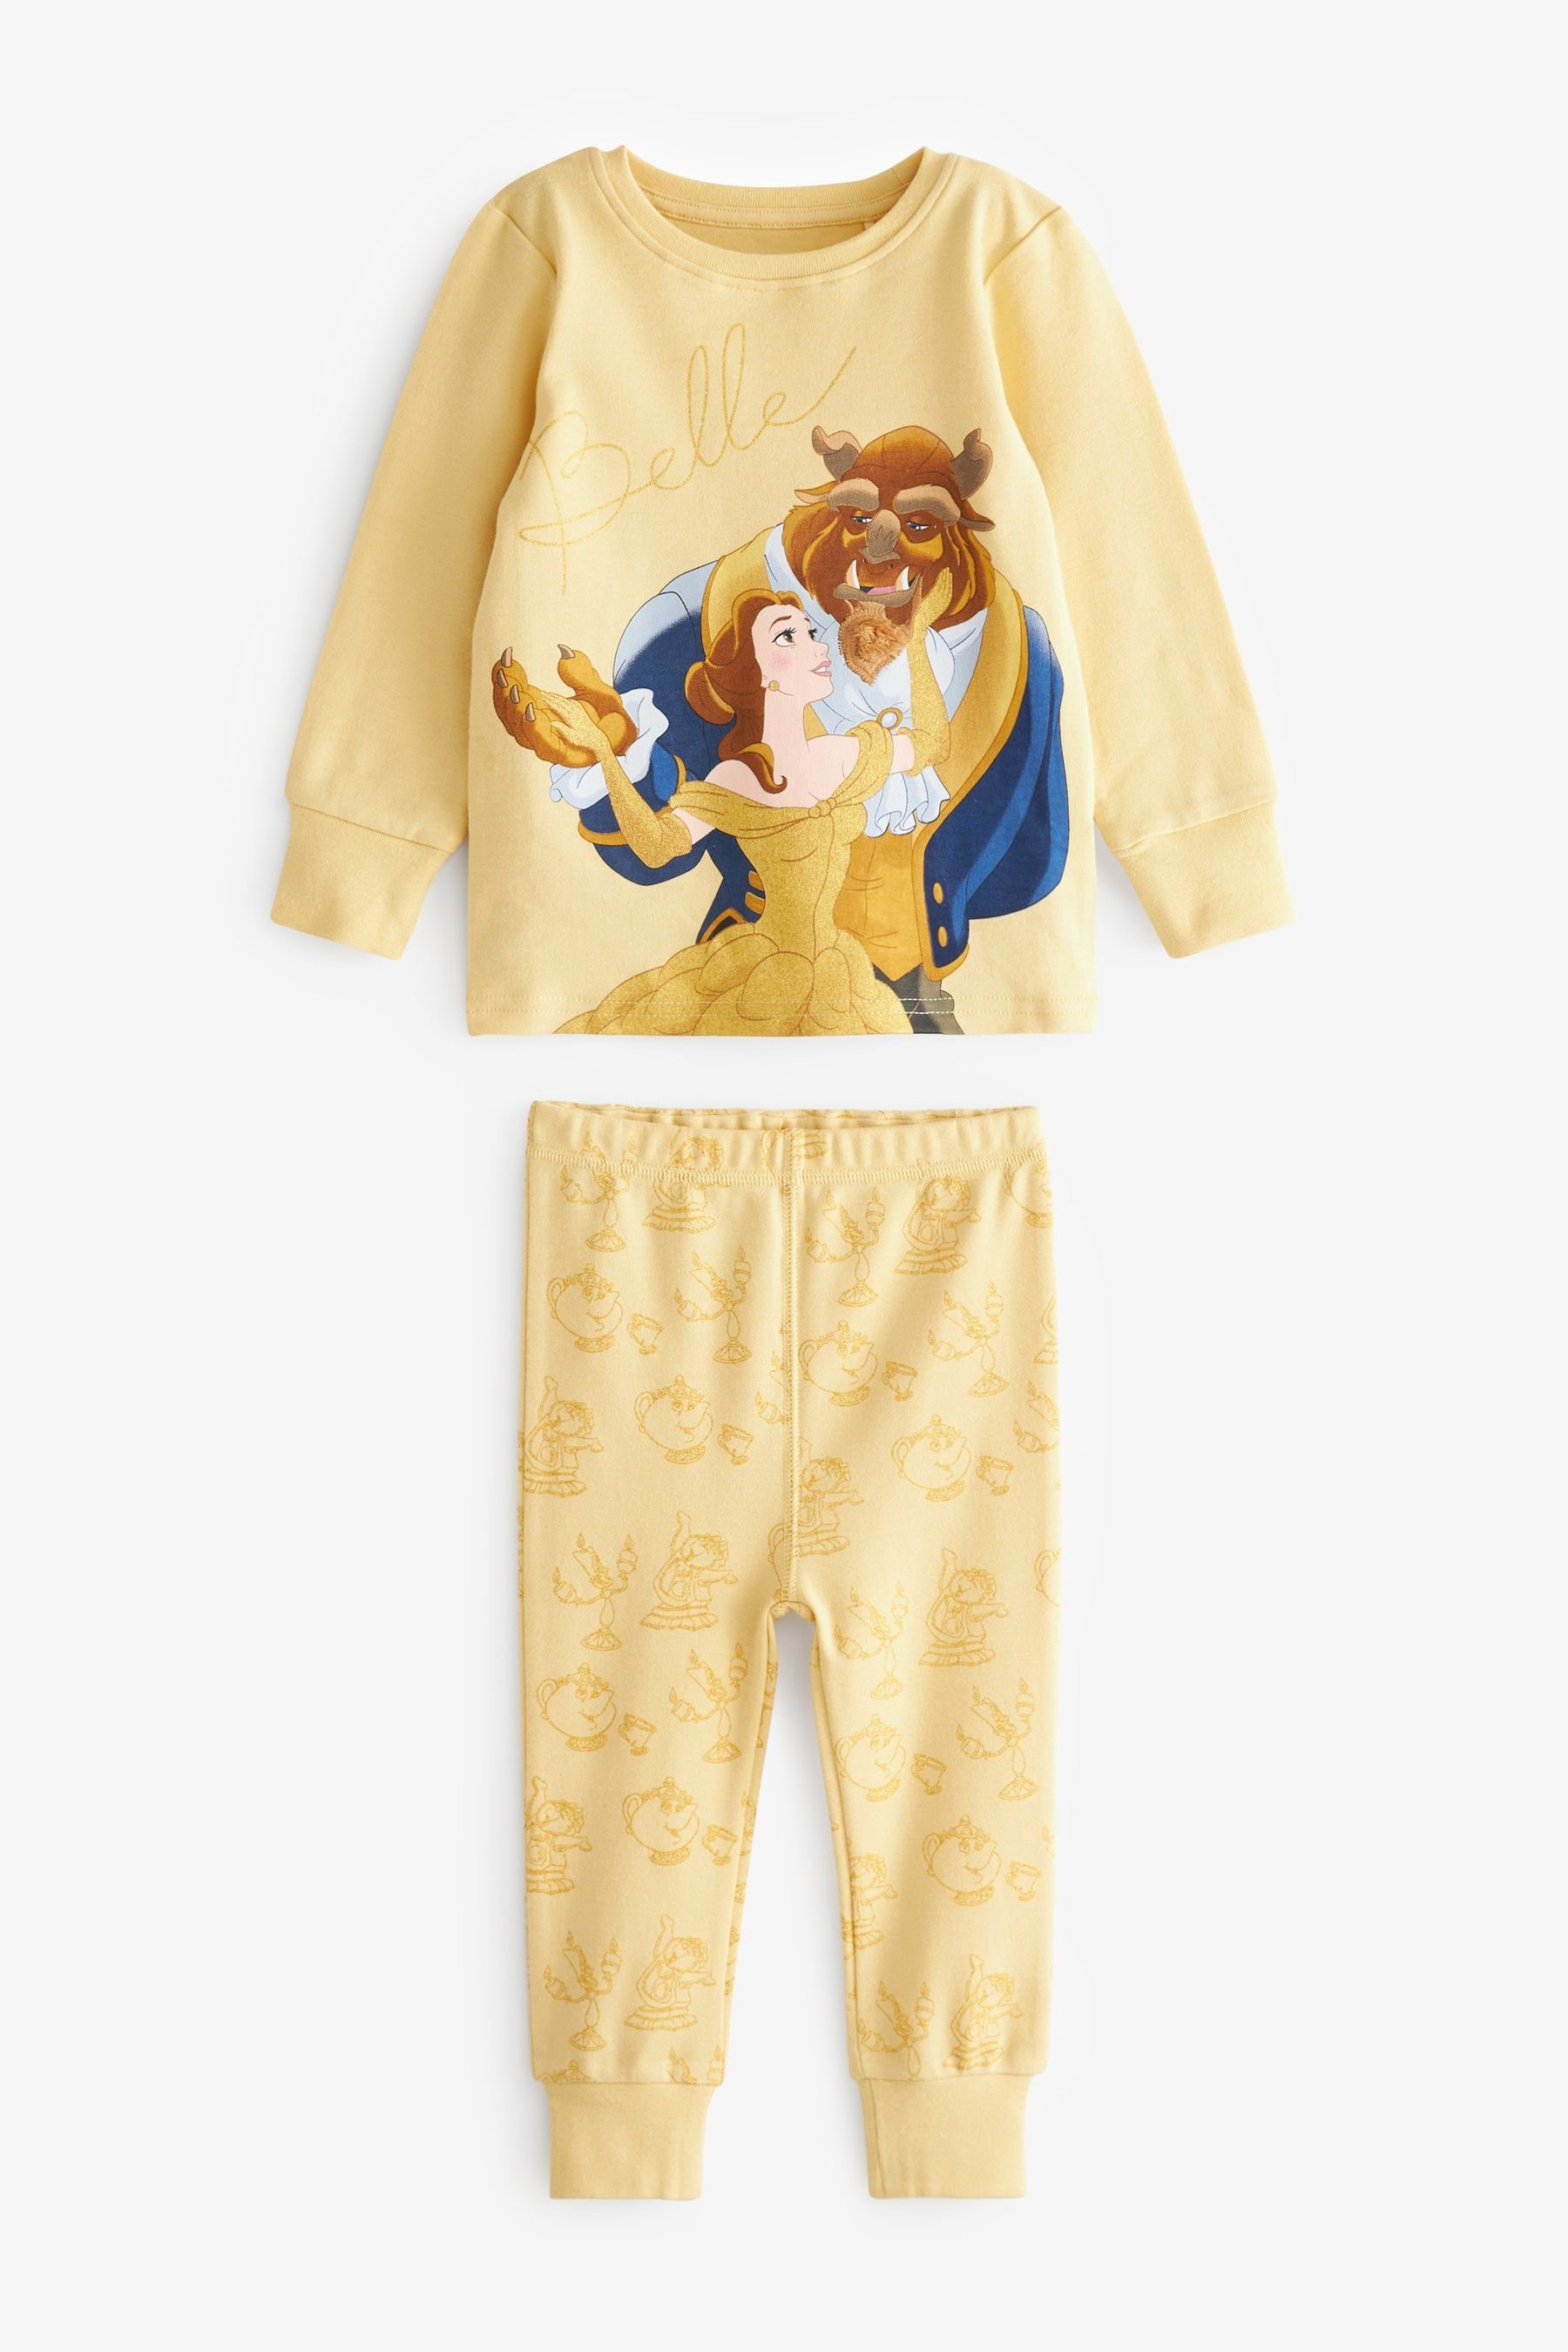 Next Pyjama Kuscheliger Pyjama, 1er-Pack (2 tlg) Disney Princess Belle Yellow